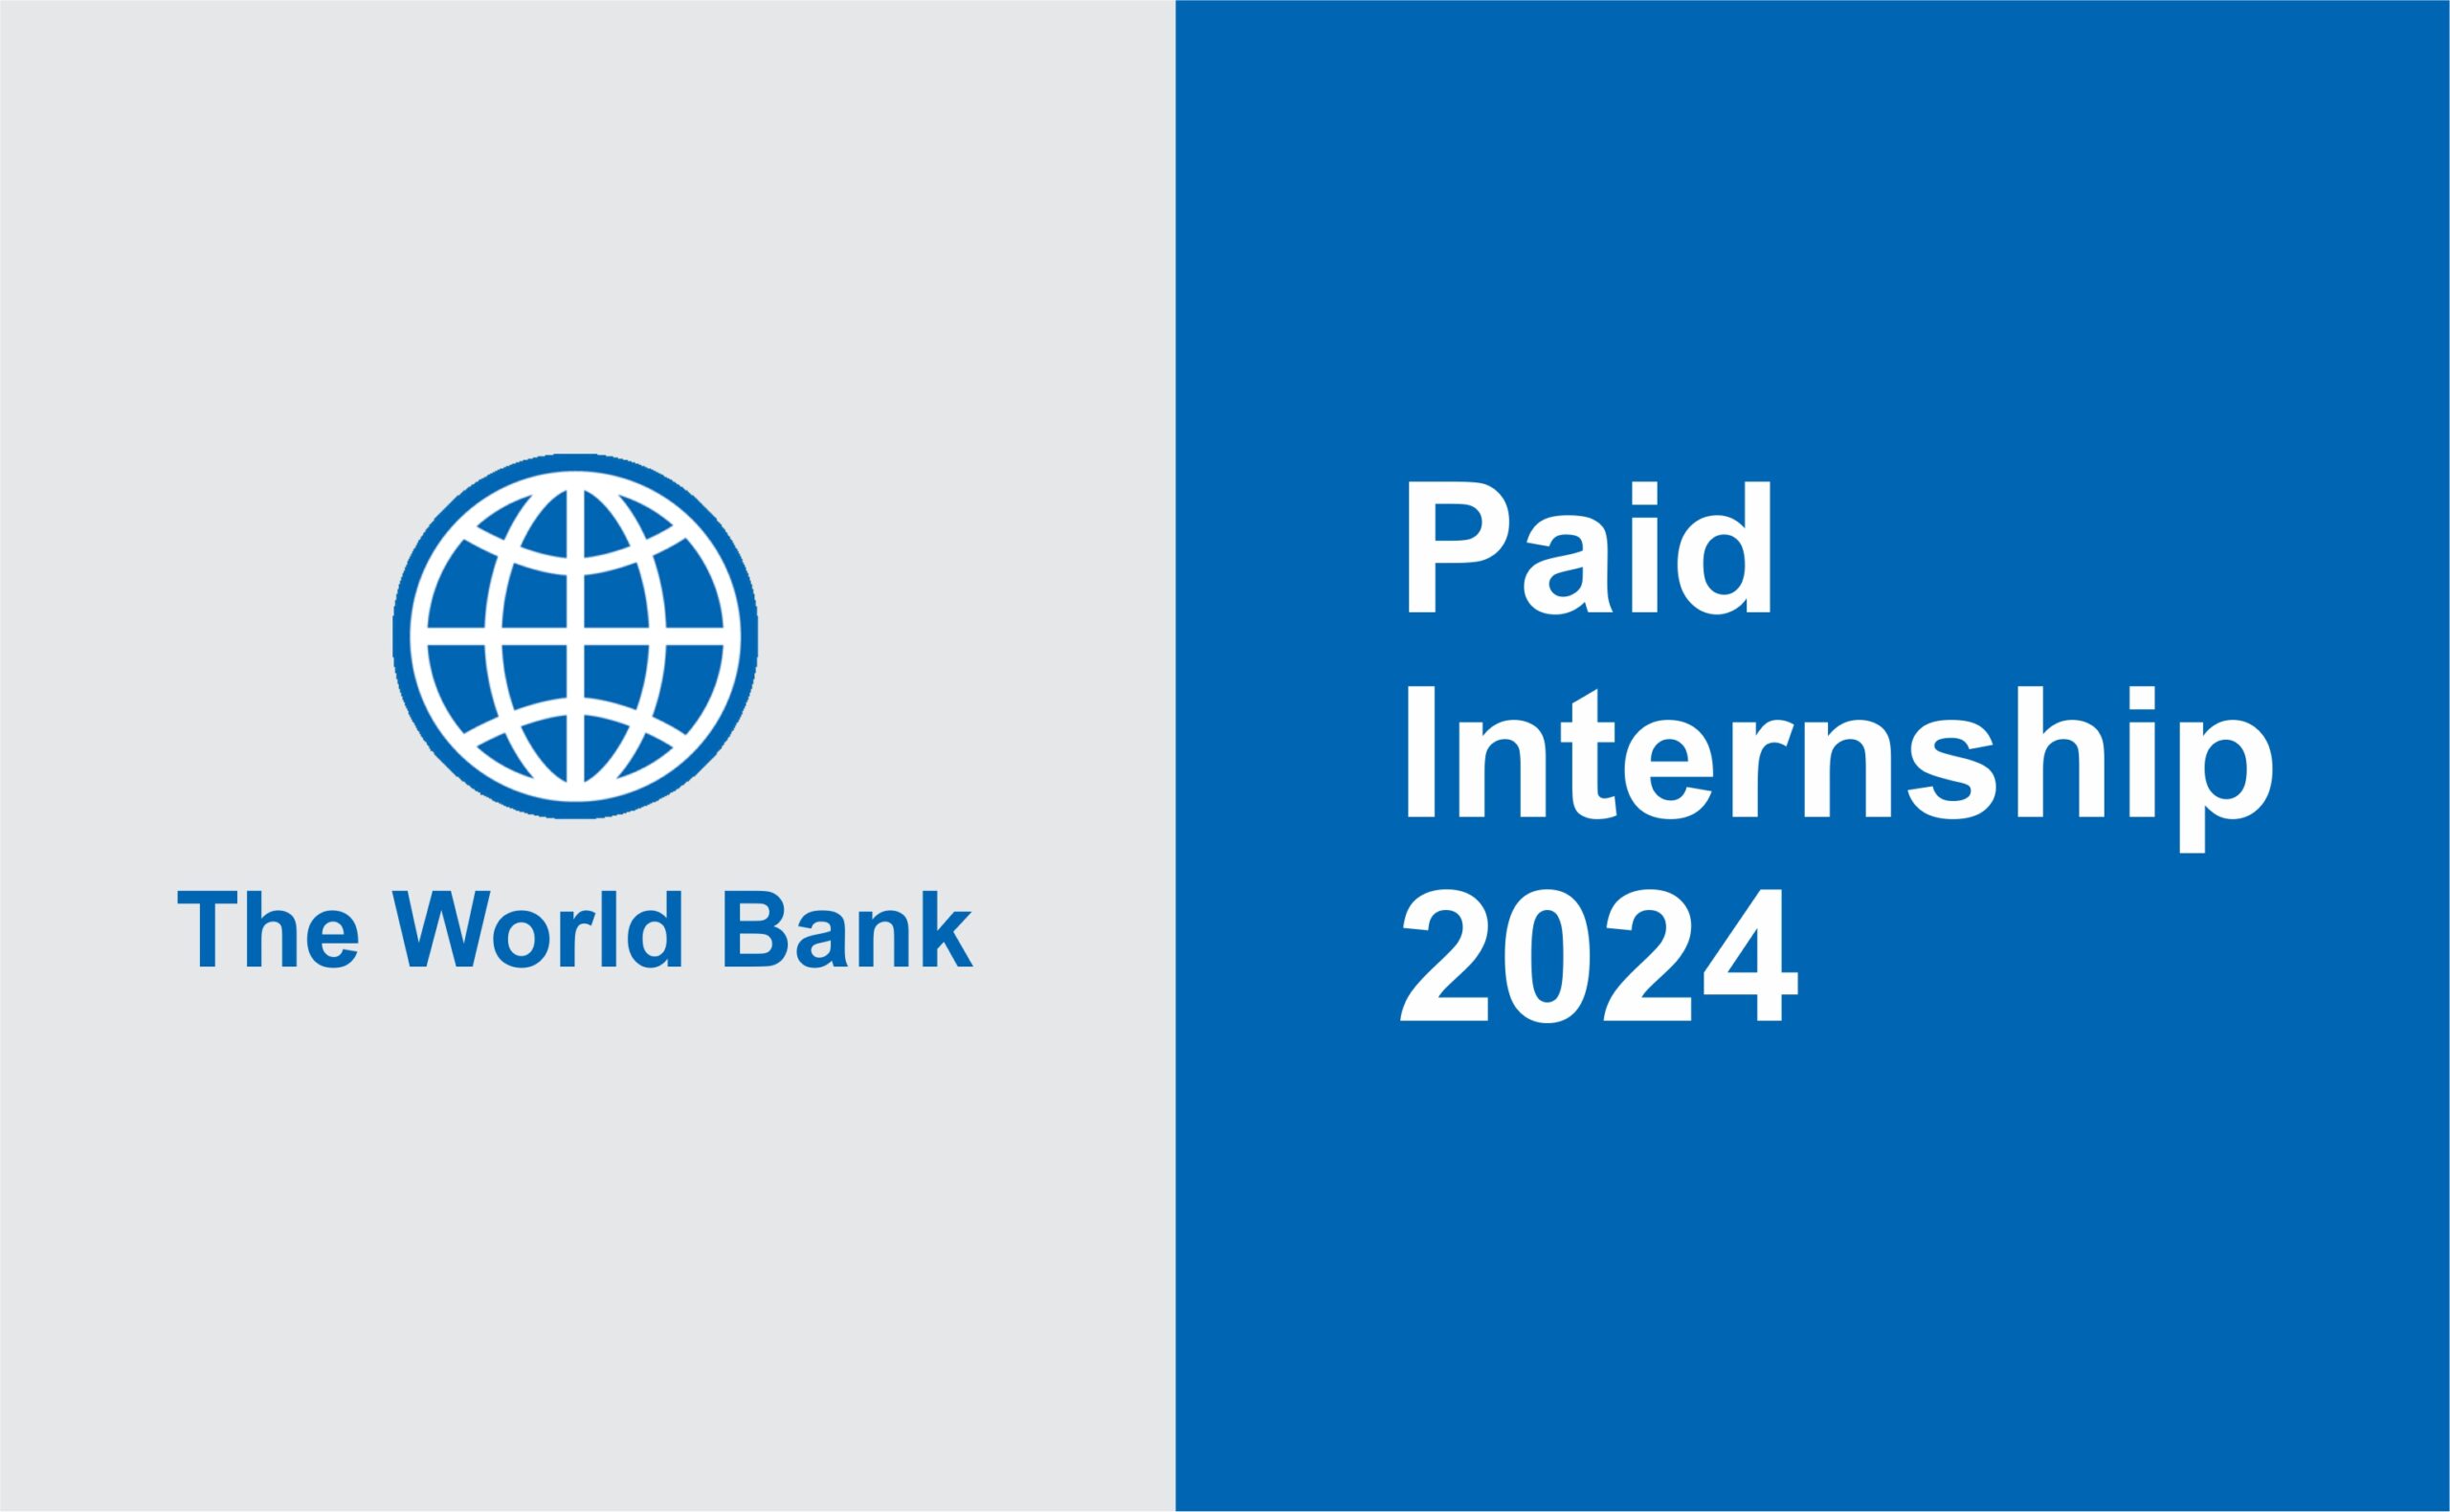 World Bank Internship Program (BIP) 2024 for young professionals